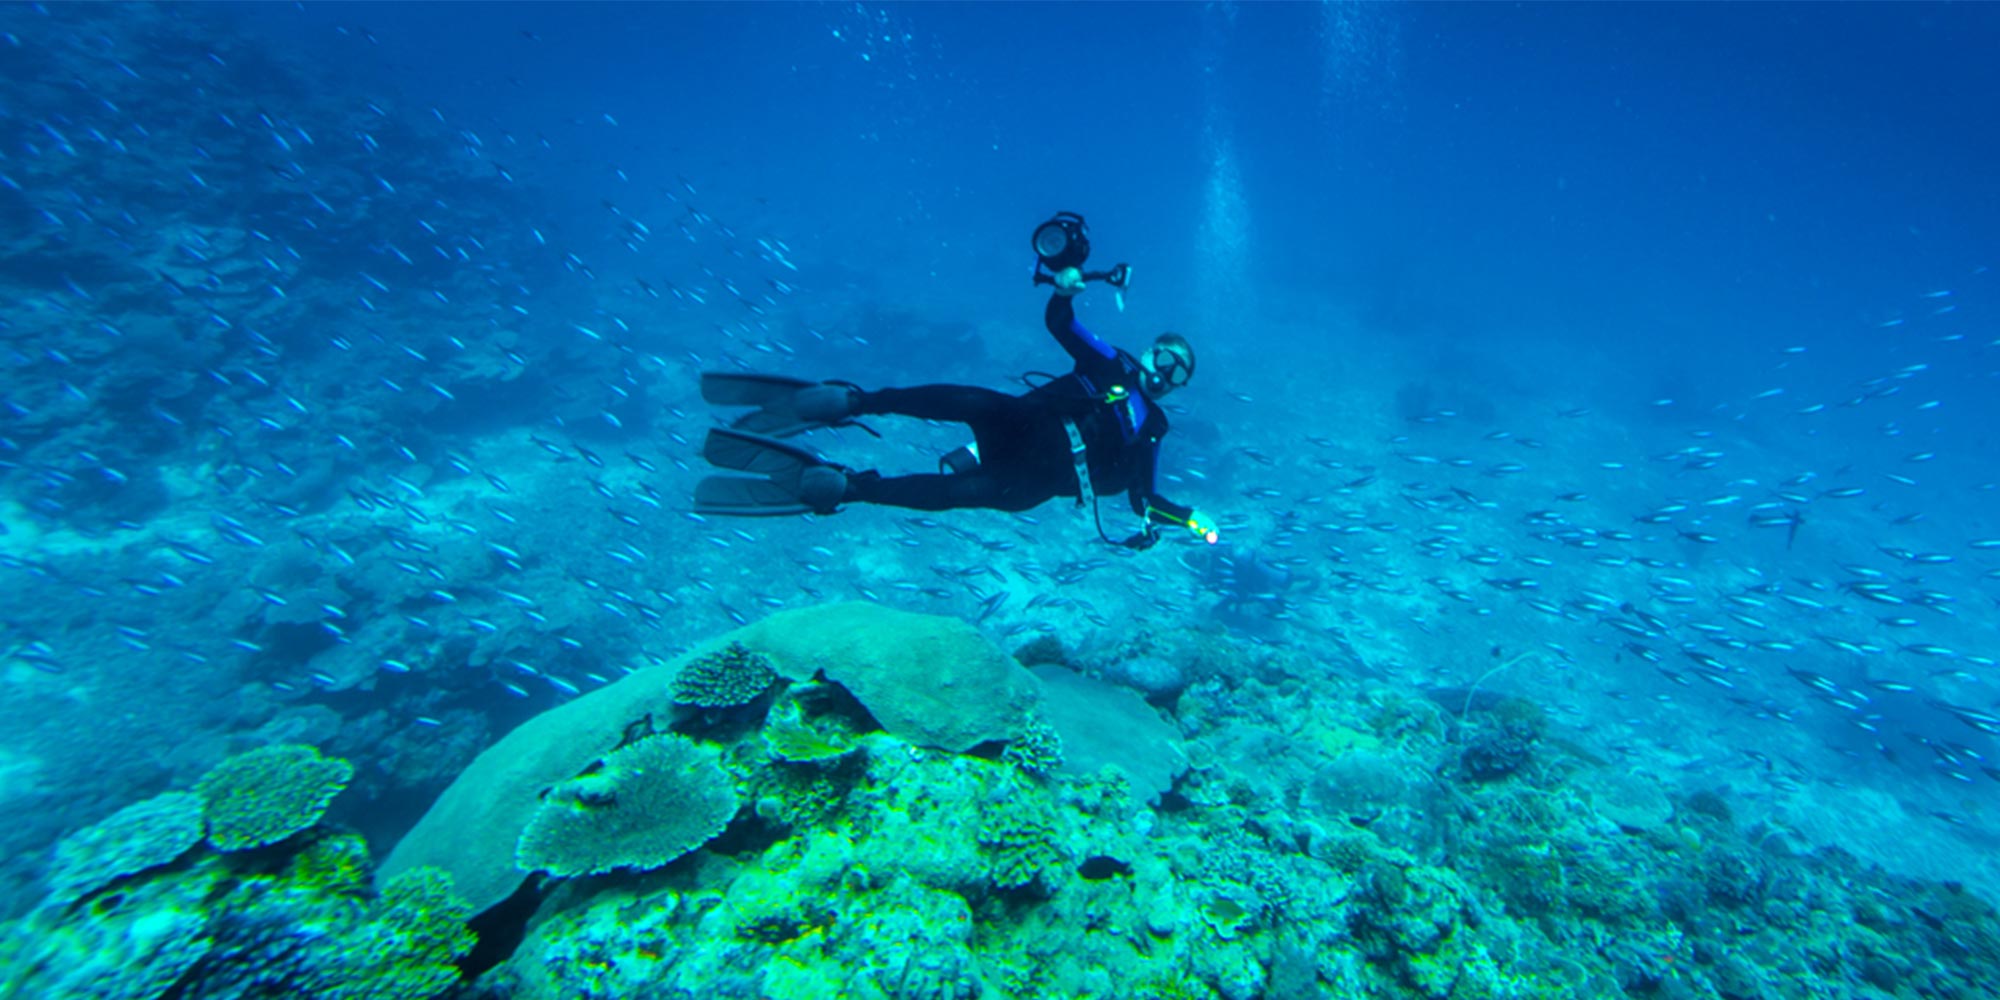 Scuba diver underwater with camera